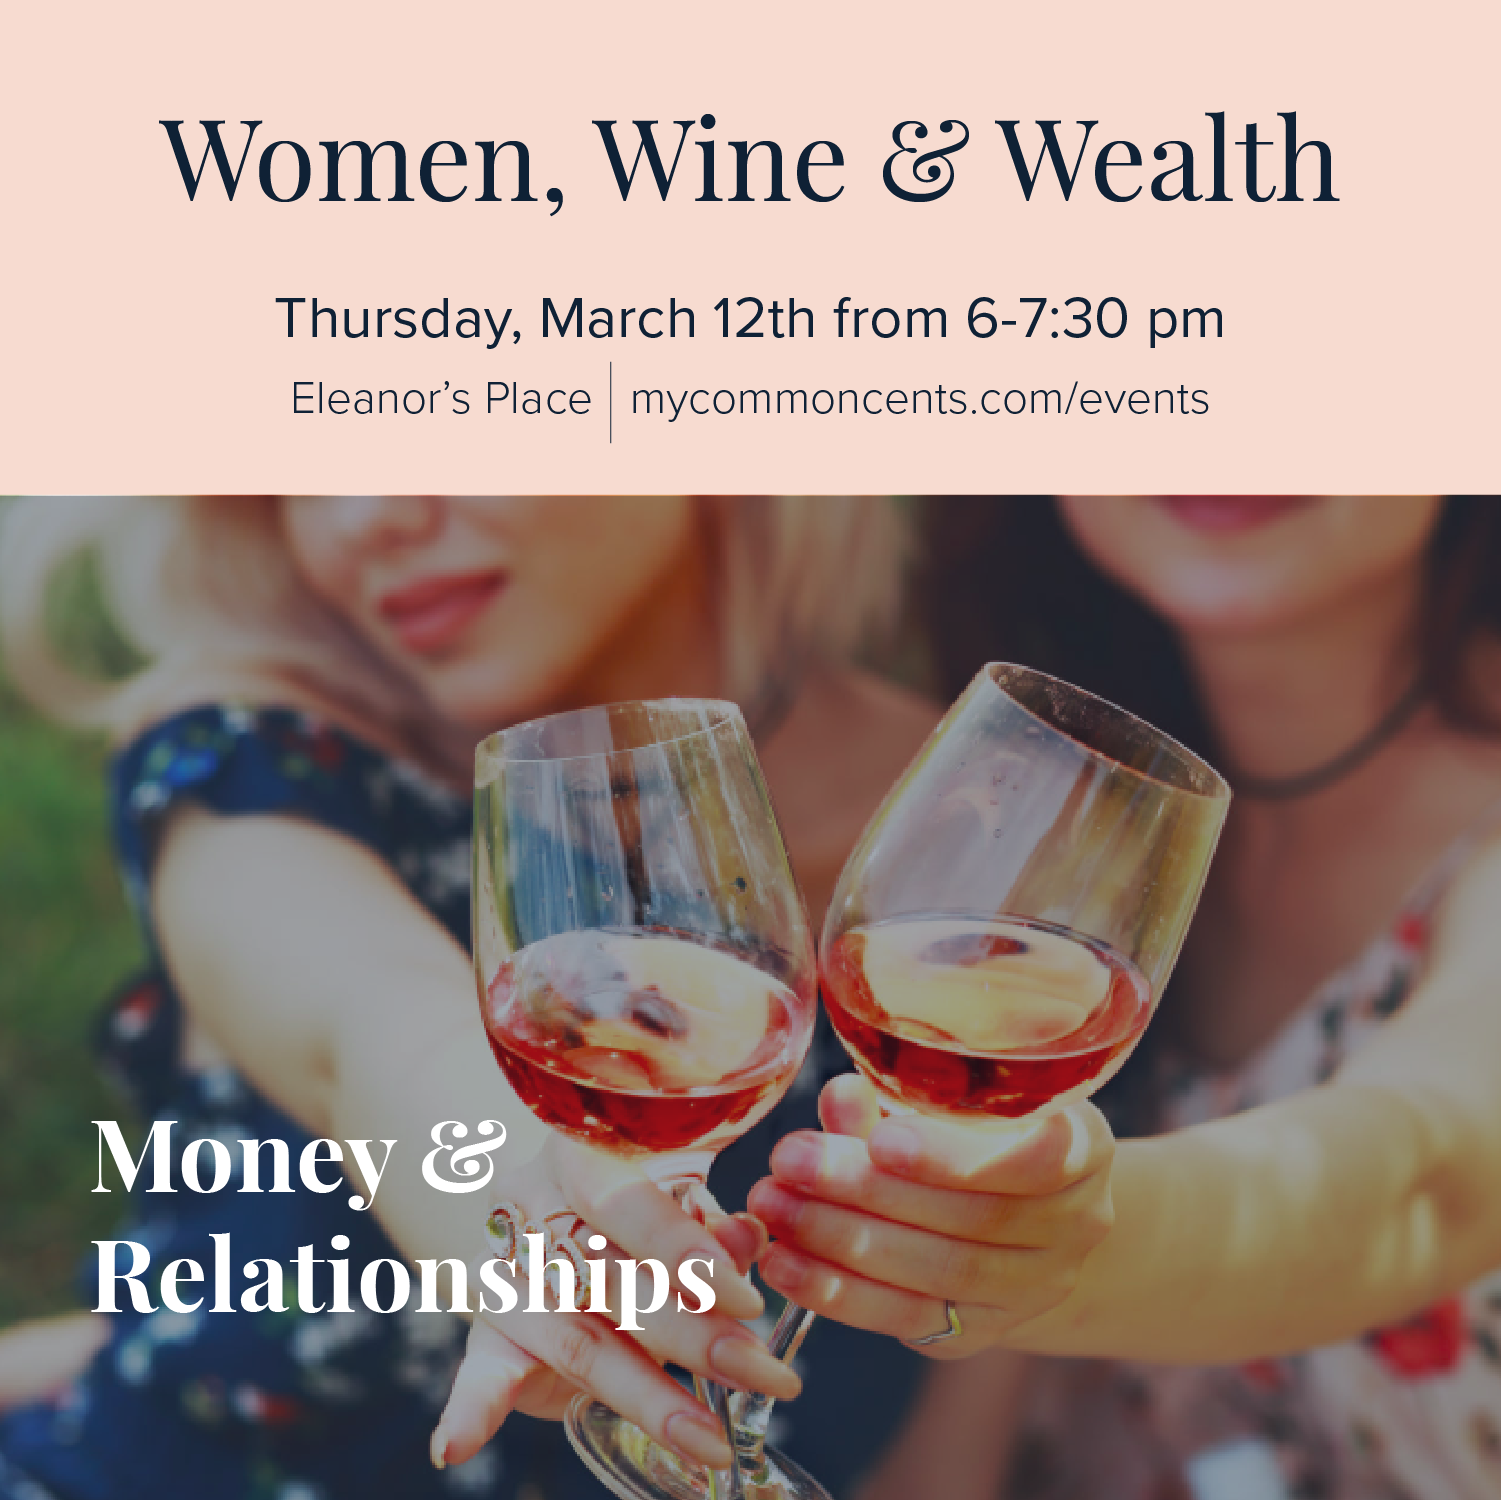 Women, Wine & Weath: Money & Relationships